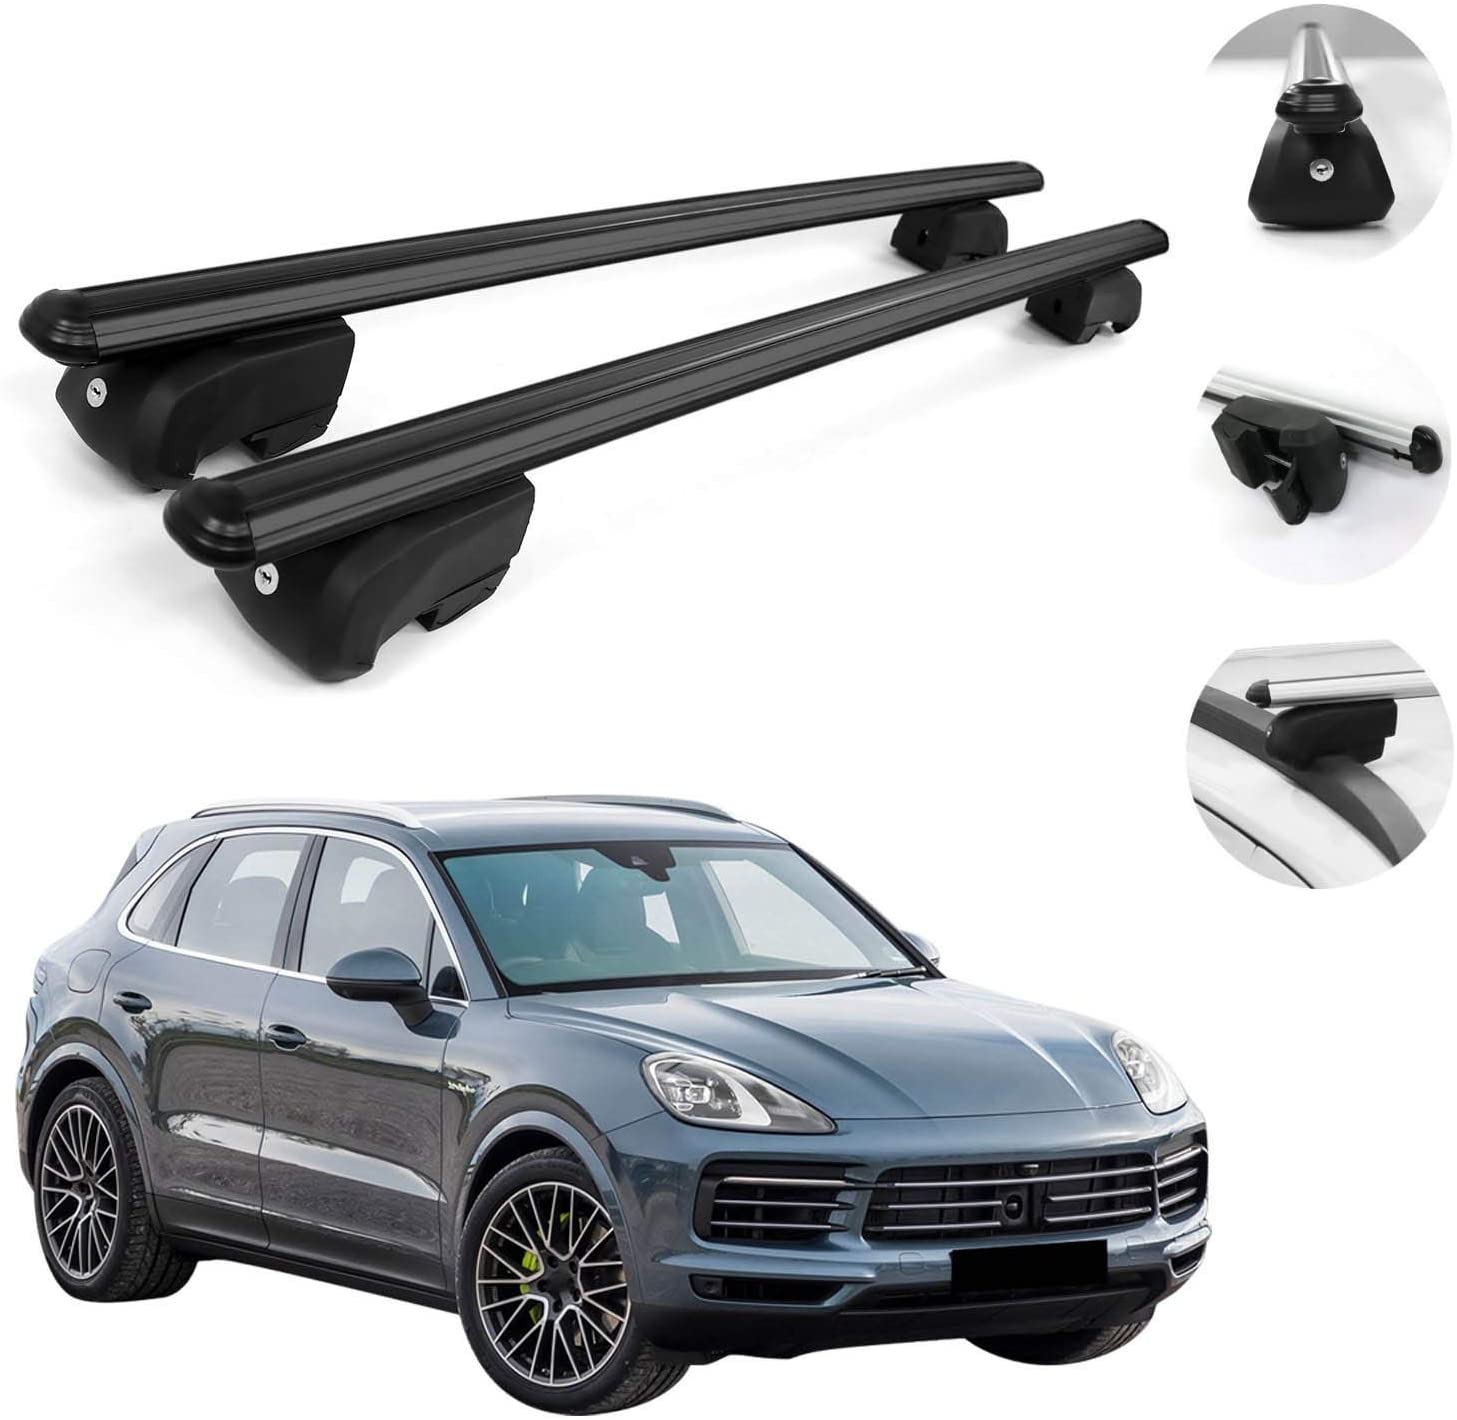 OMAC Automotive Exterior Accessories Roof Rack Crossbars | Aluminum Black Roof Top Cargo Racks | Luggage Ski Kayak Bike Carriers Set 2 Pcs | Fits Porsche Cayenne 2019-2021